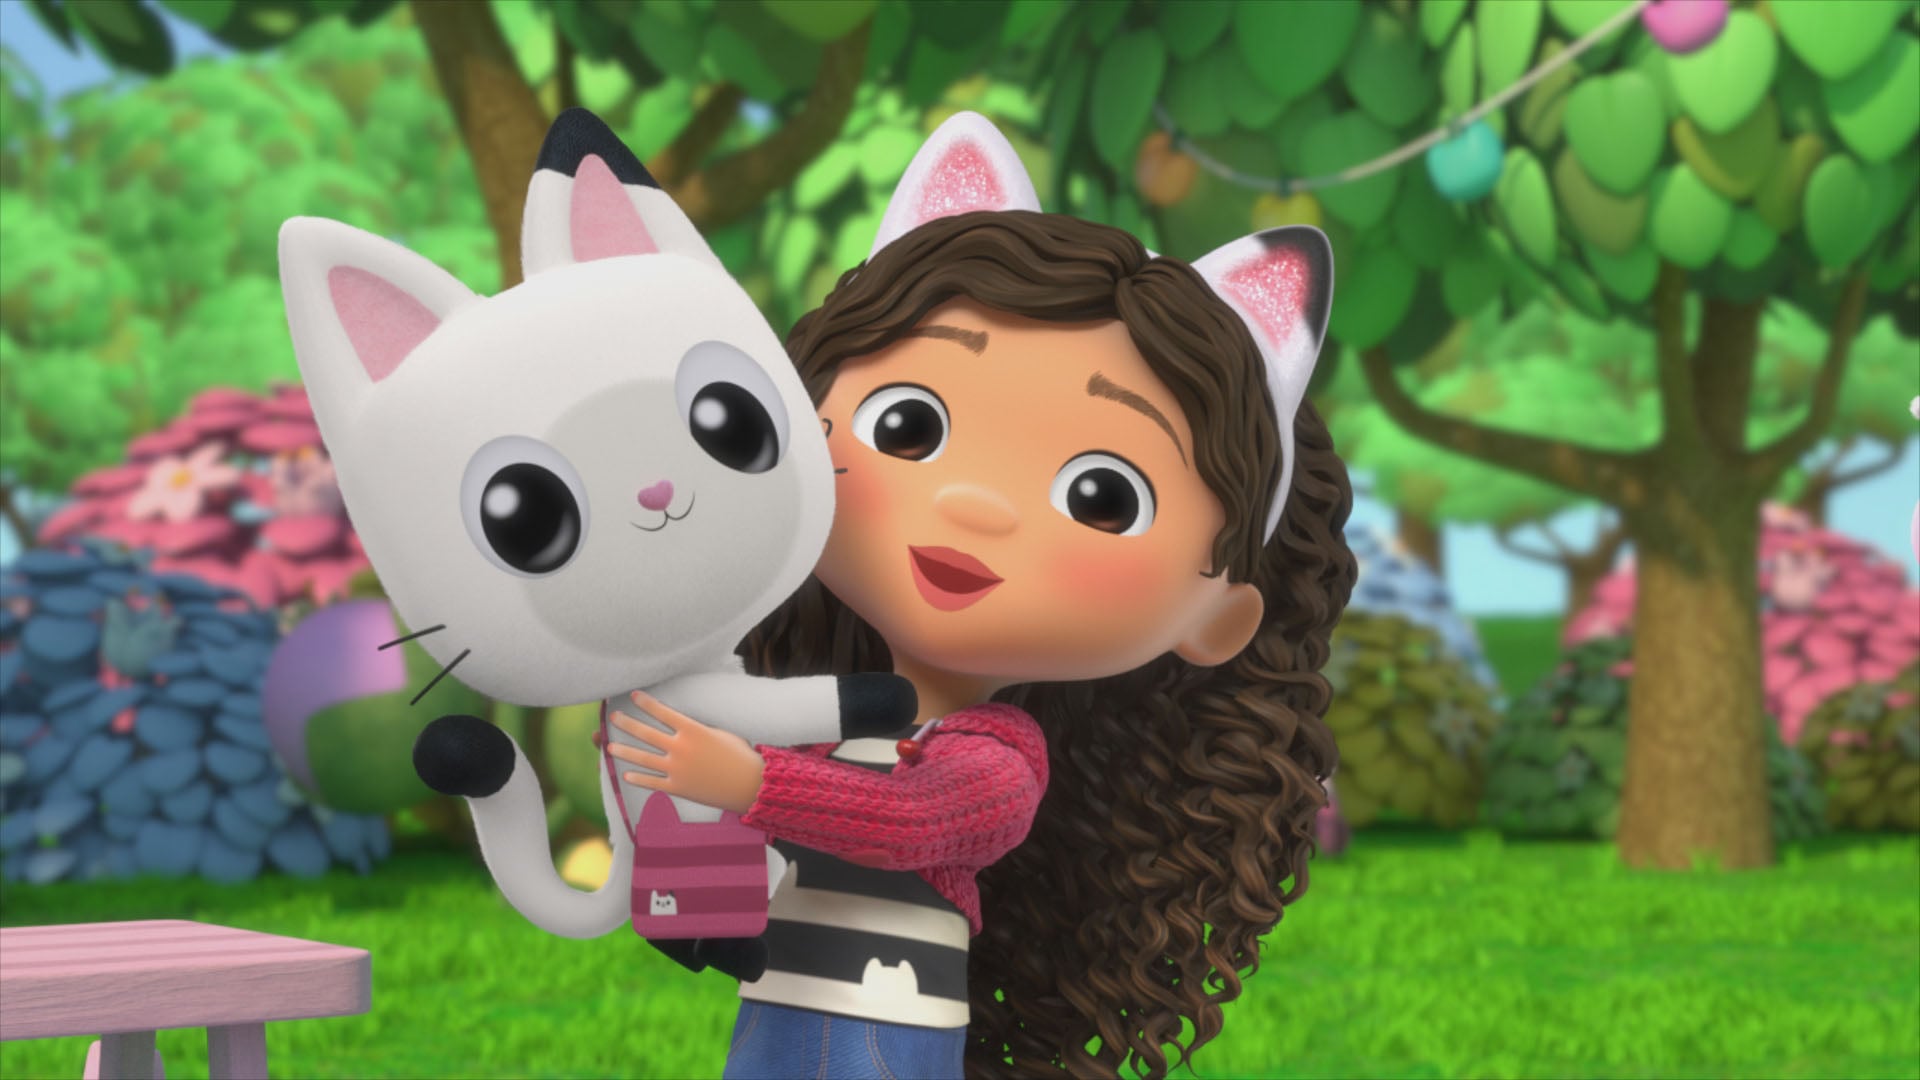 DreamWorks Drops 'Gabby's Dollhouse' Season 9 Trailer